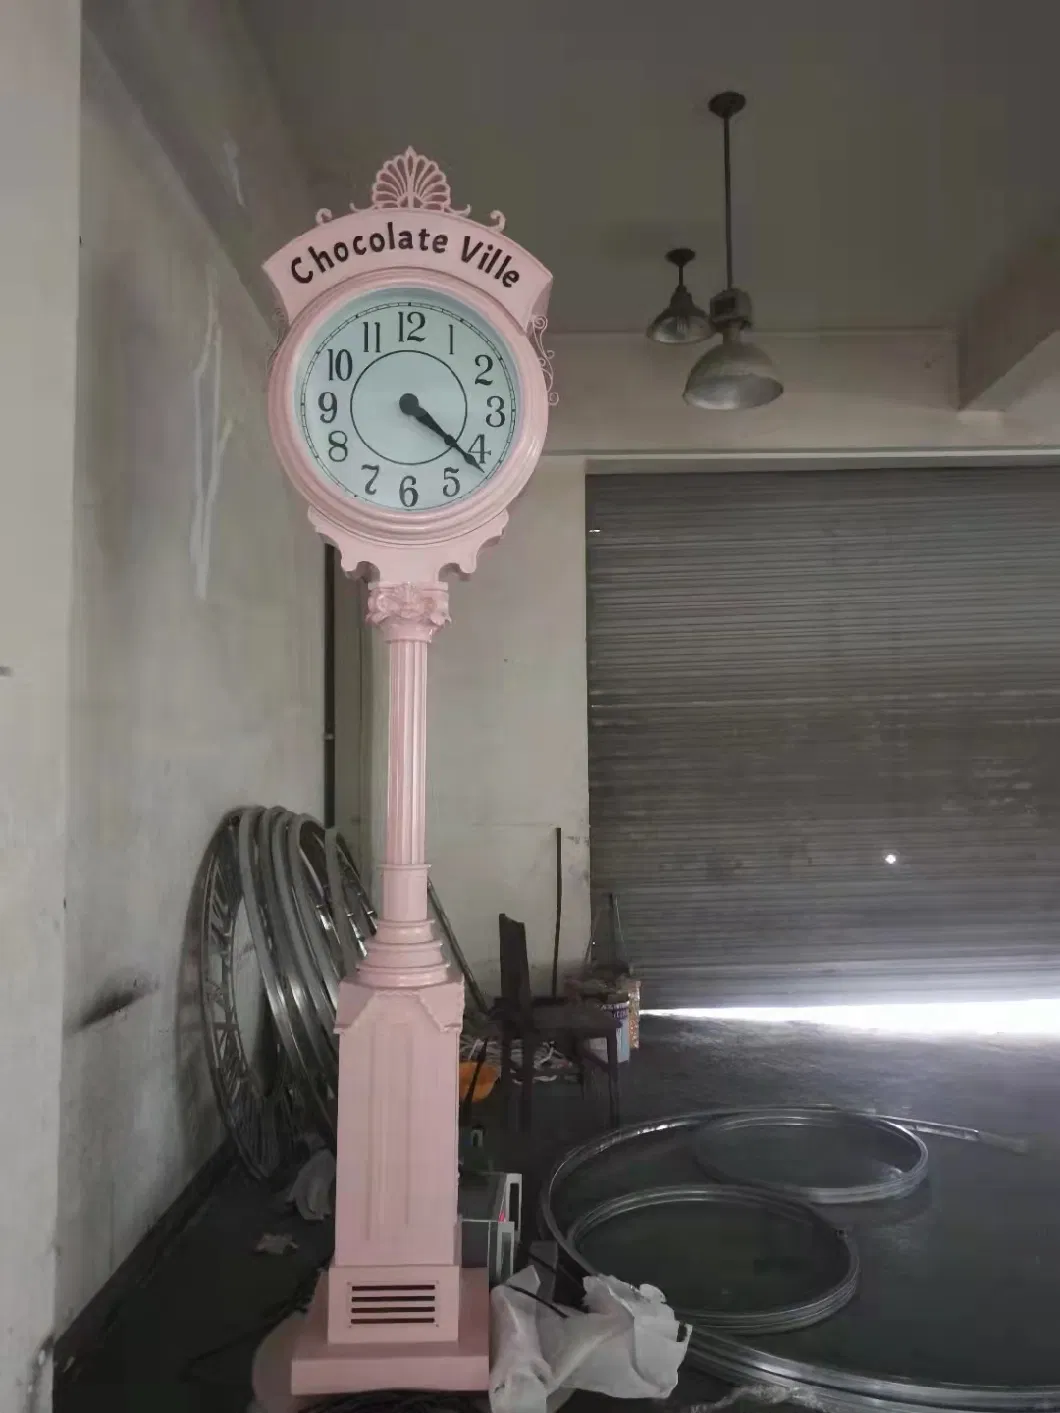 Exquisite Landscape Street Road Tower Clock Details Determine Quality